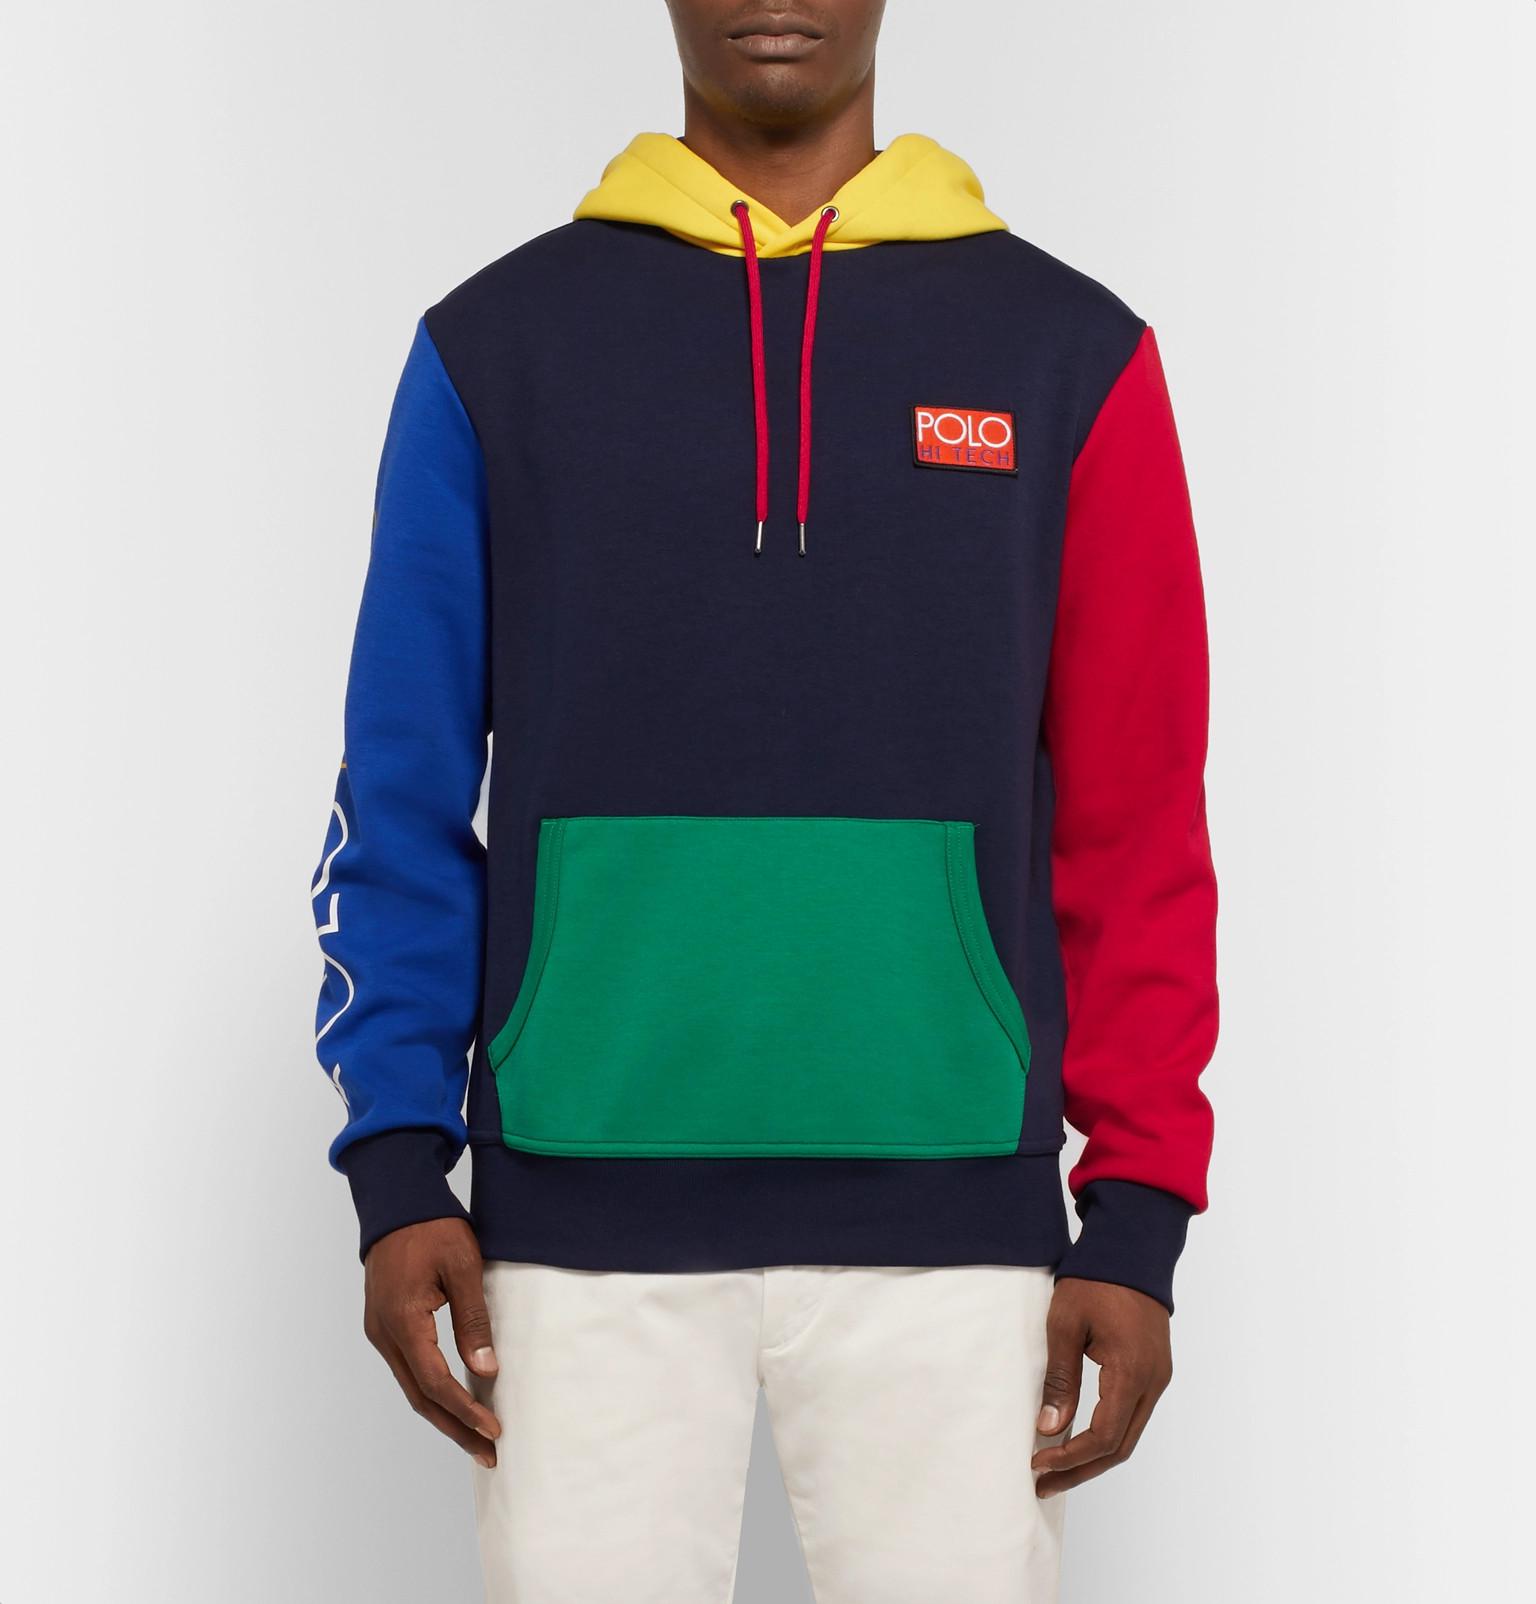 Polo Color Block Sweatshirt on Sale, 52% OFF | www.velocityusa.com